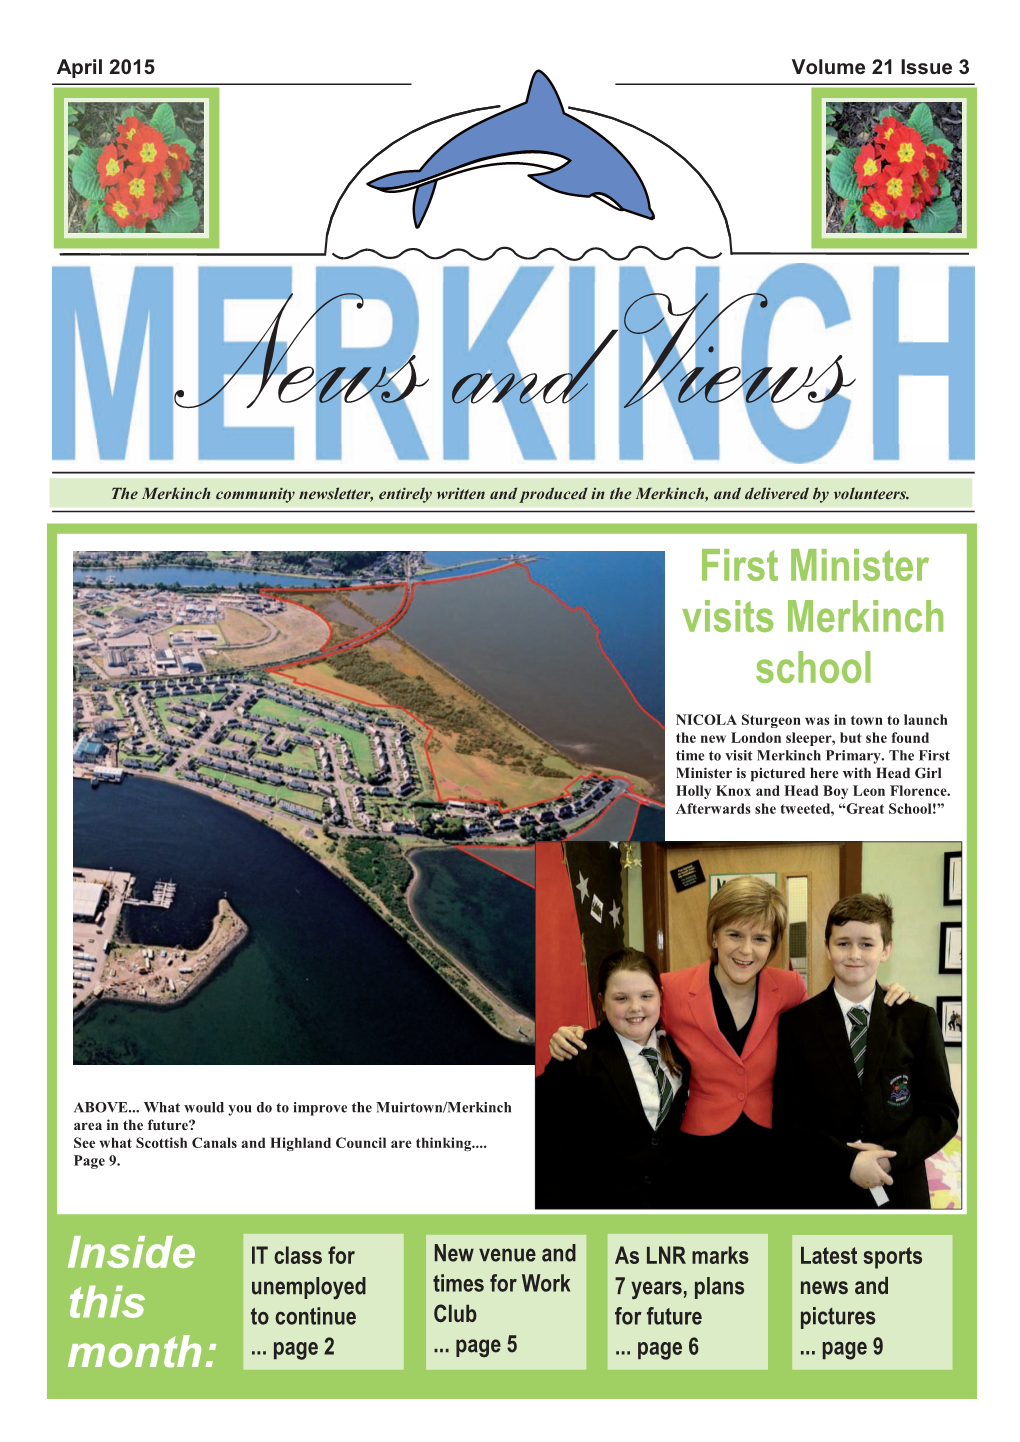 First Minister Visits Merkinch School